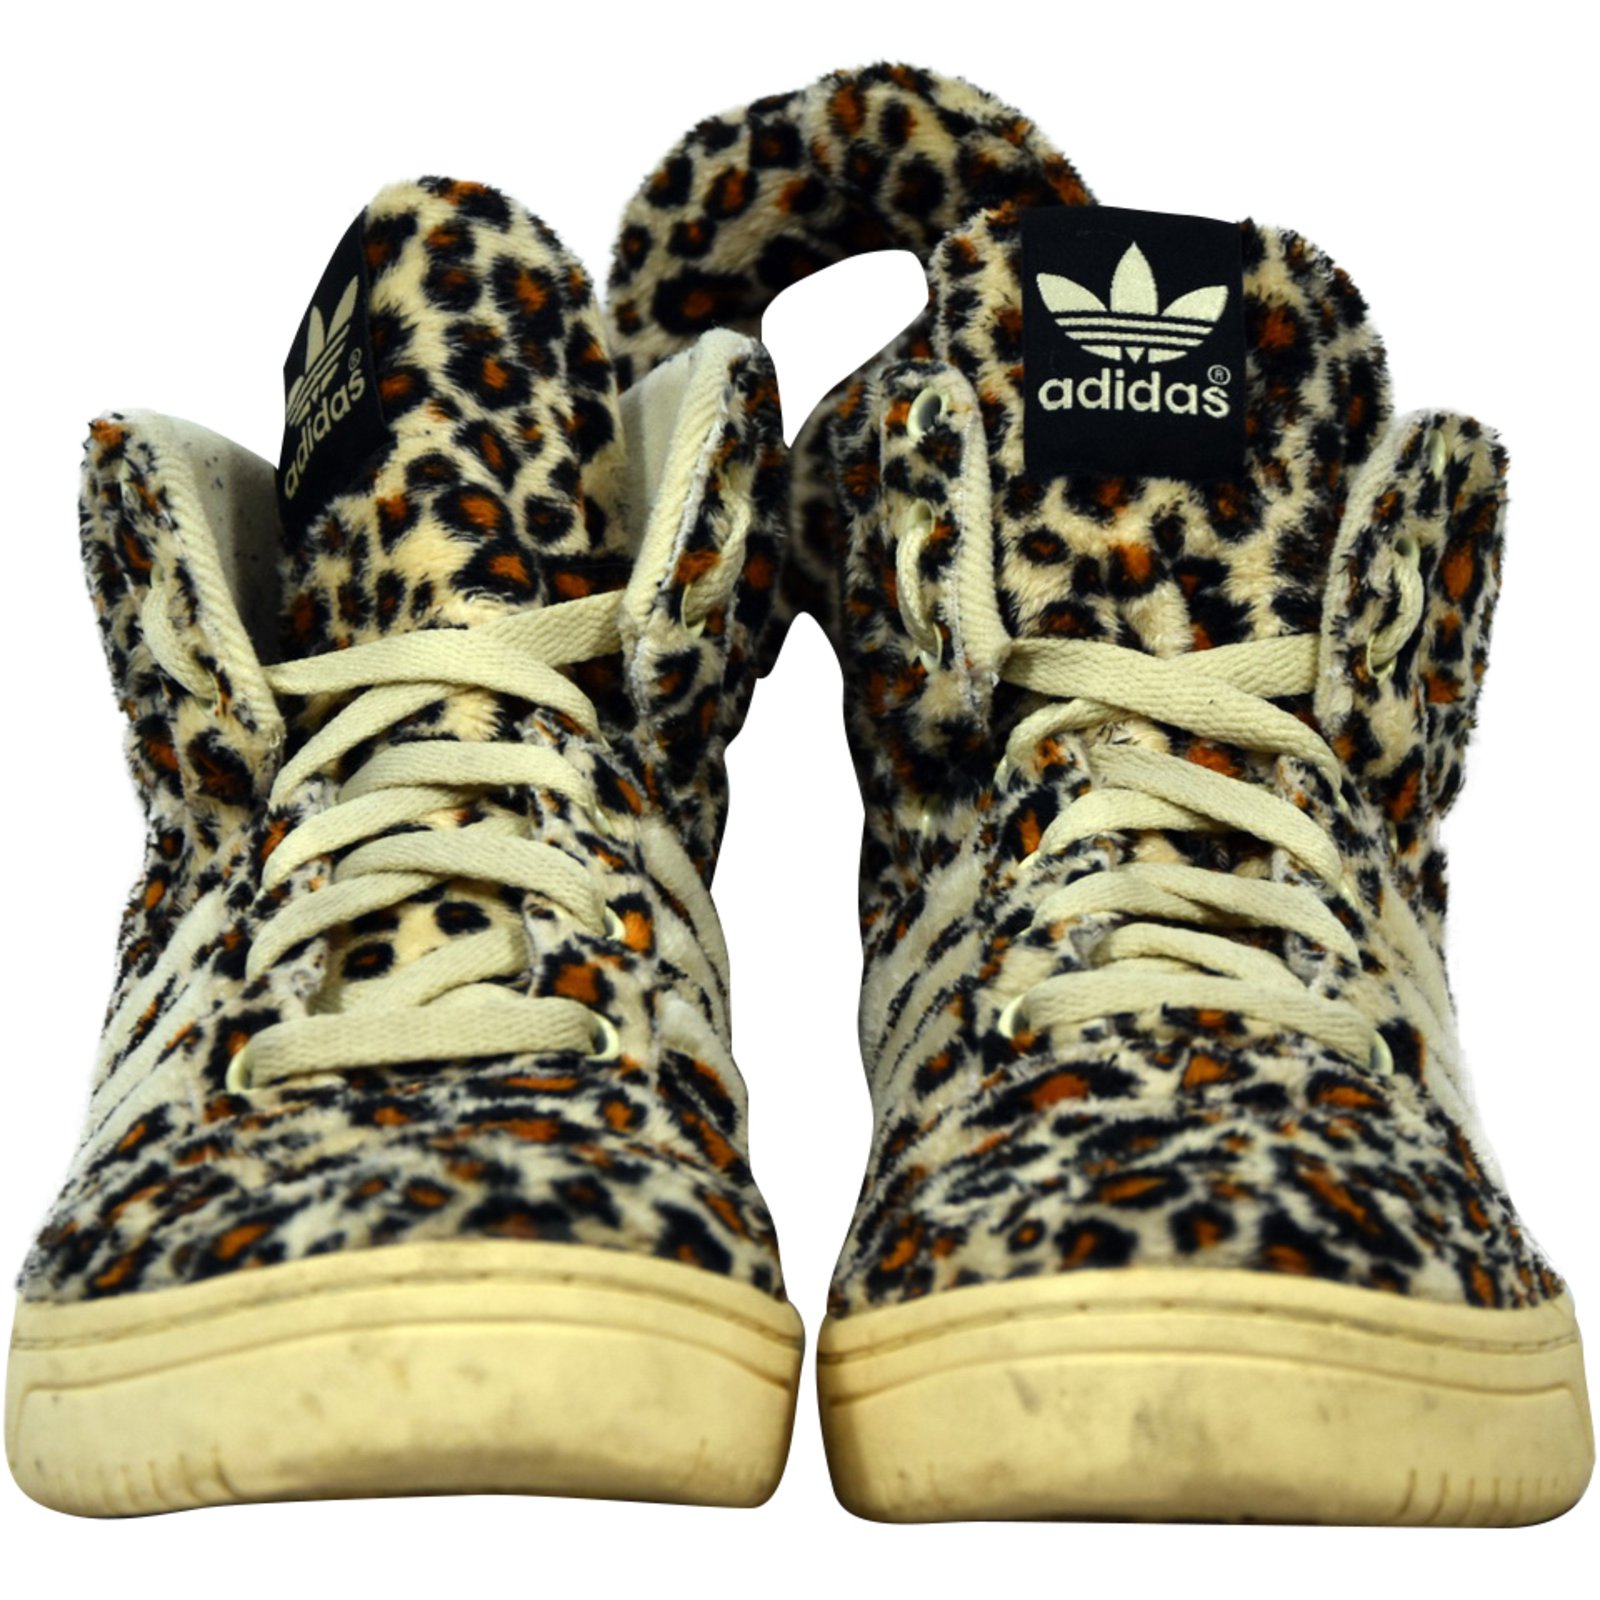 adidas sneakers leopard print